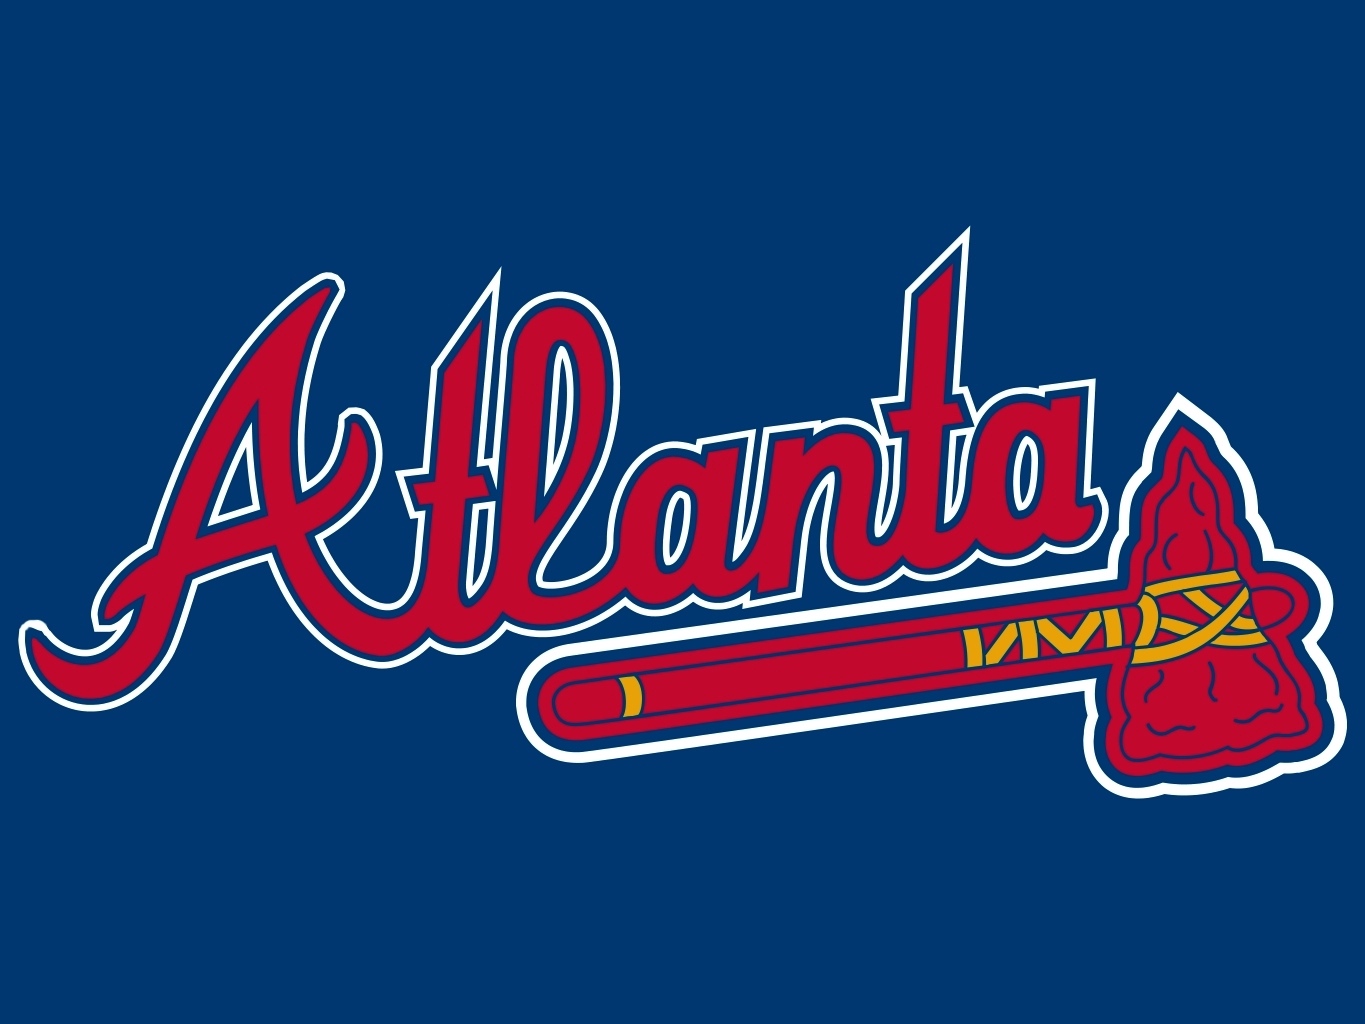 Atlanta Braves Nail Decals - wide 4